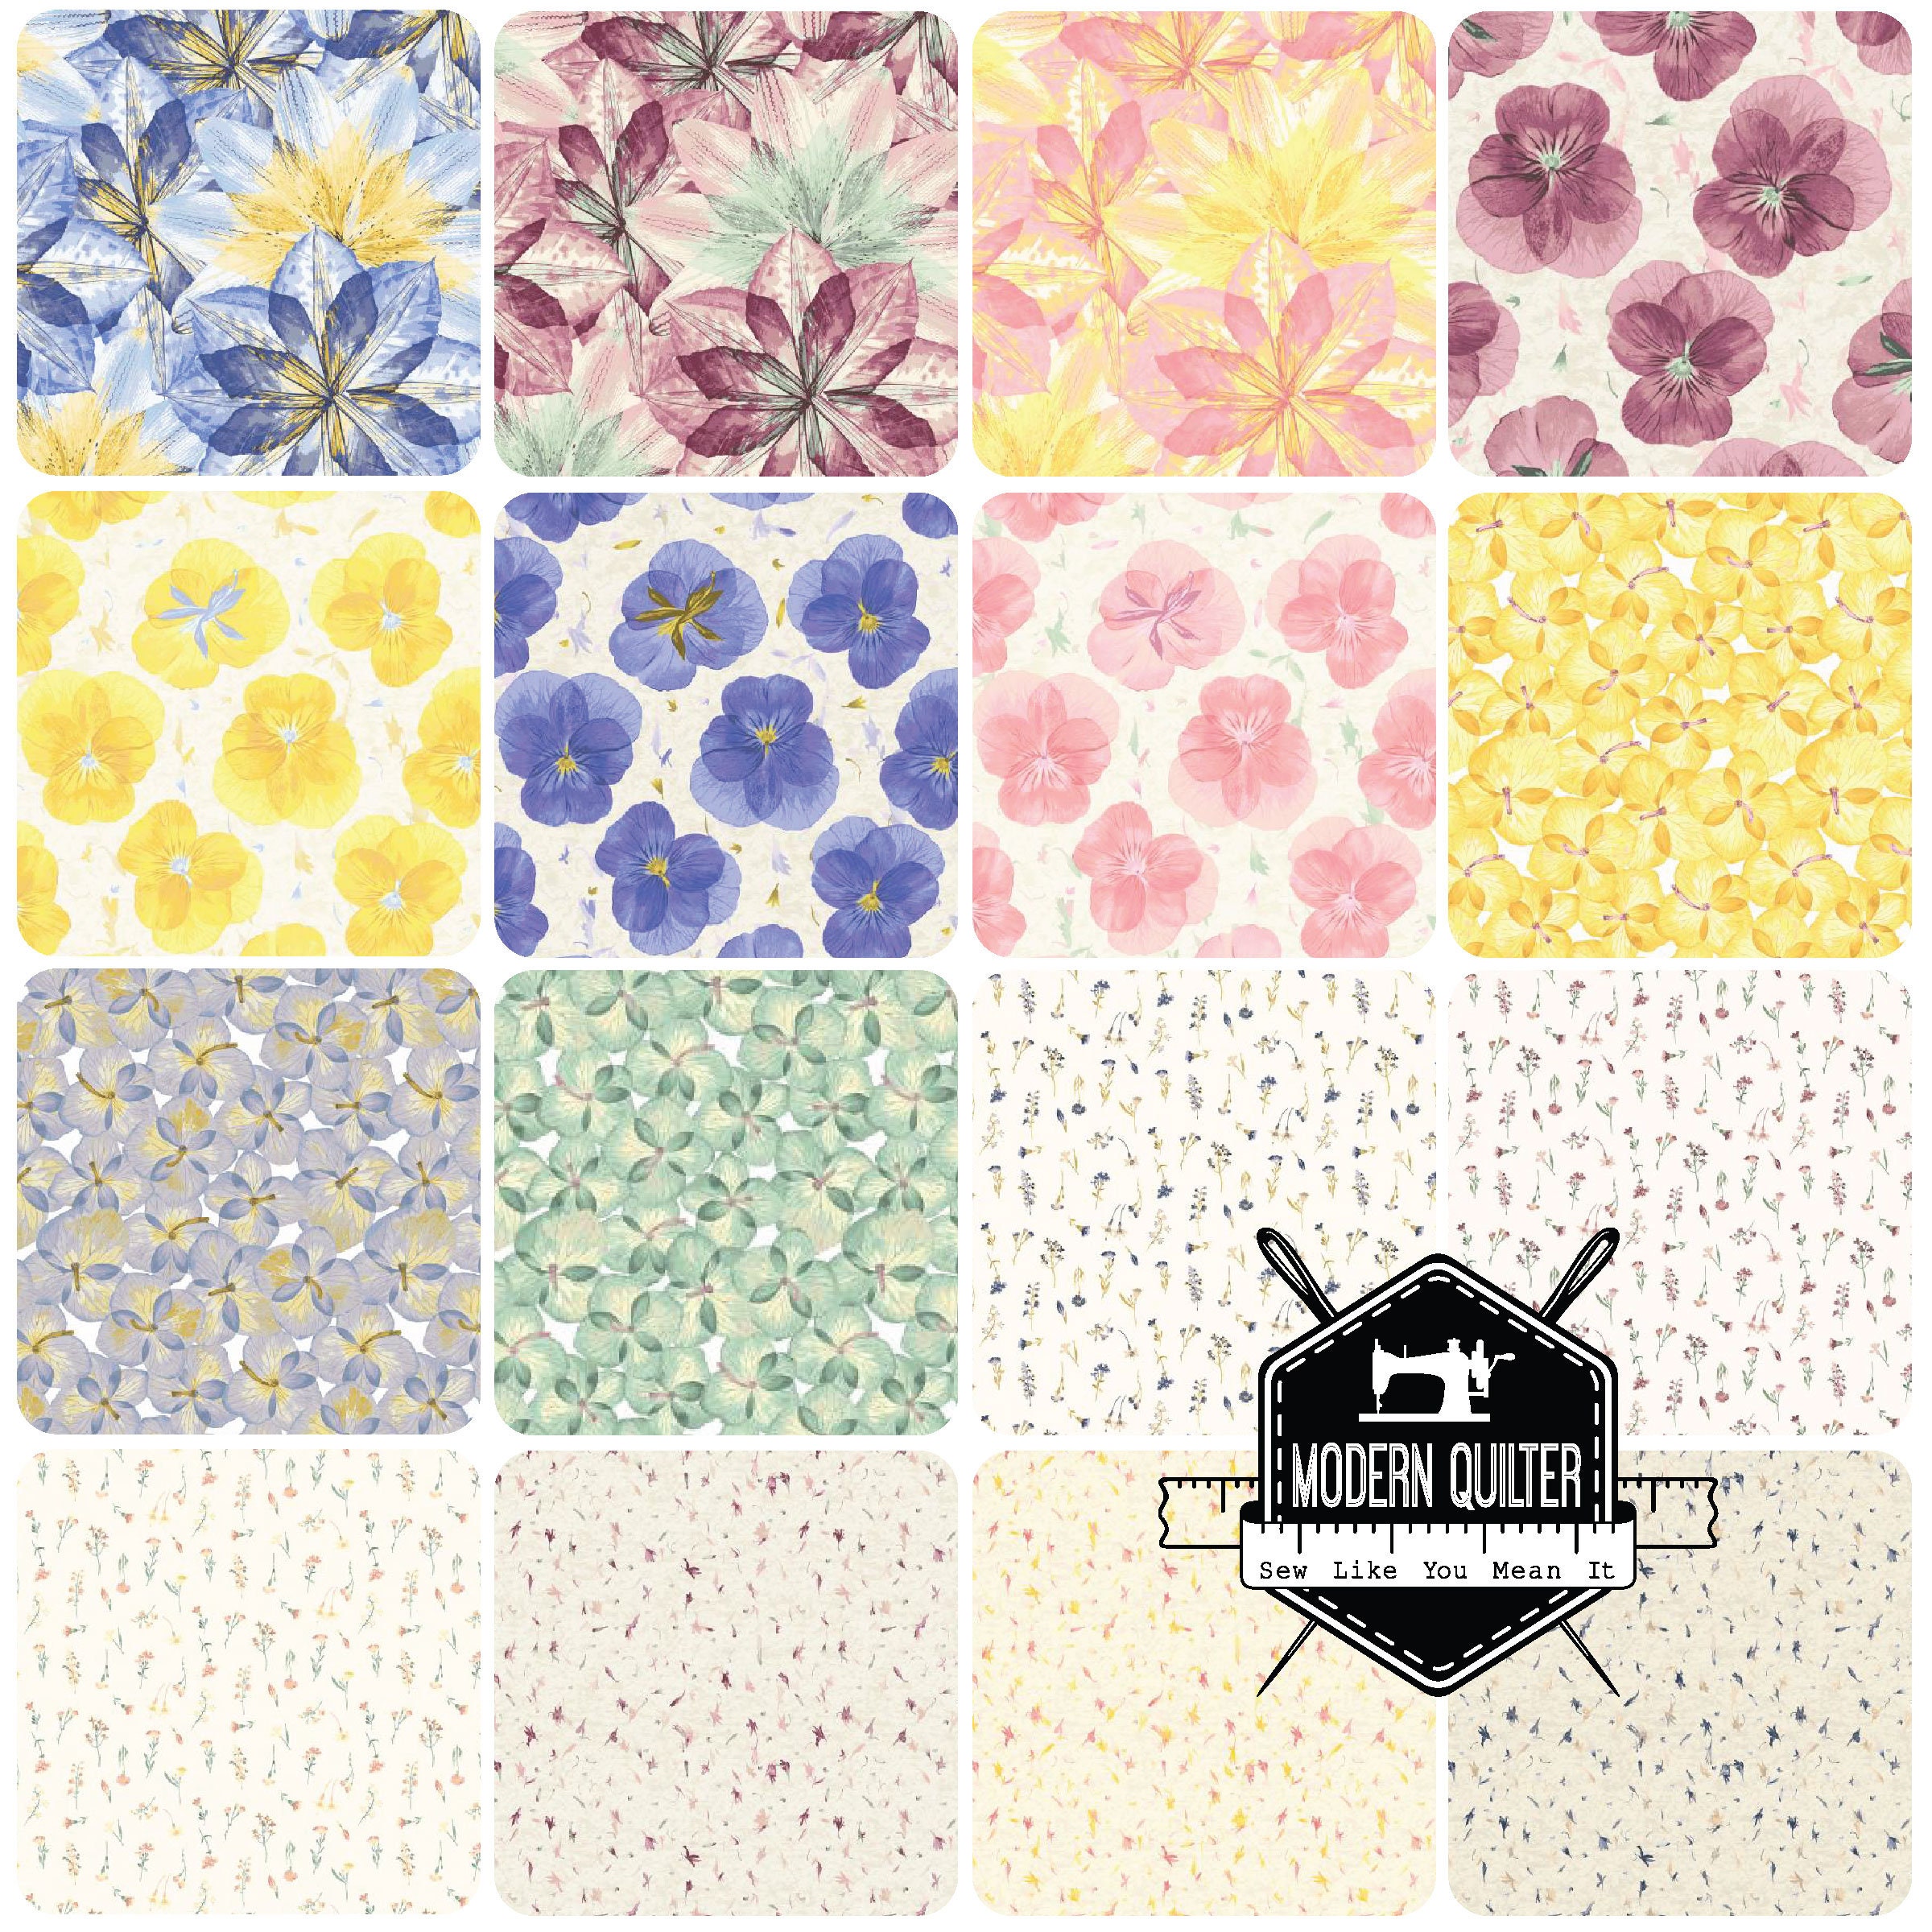 Pressed Floral Fat Quarter Bundle by RJR Fabrics 16 Prints | Etsy